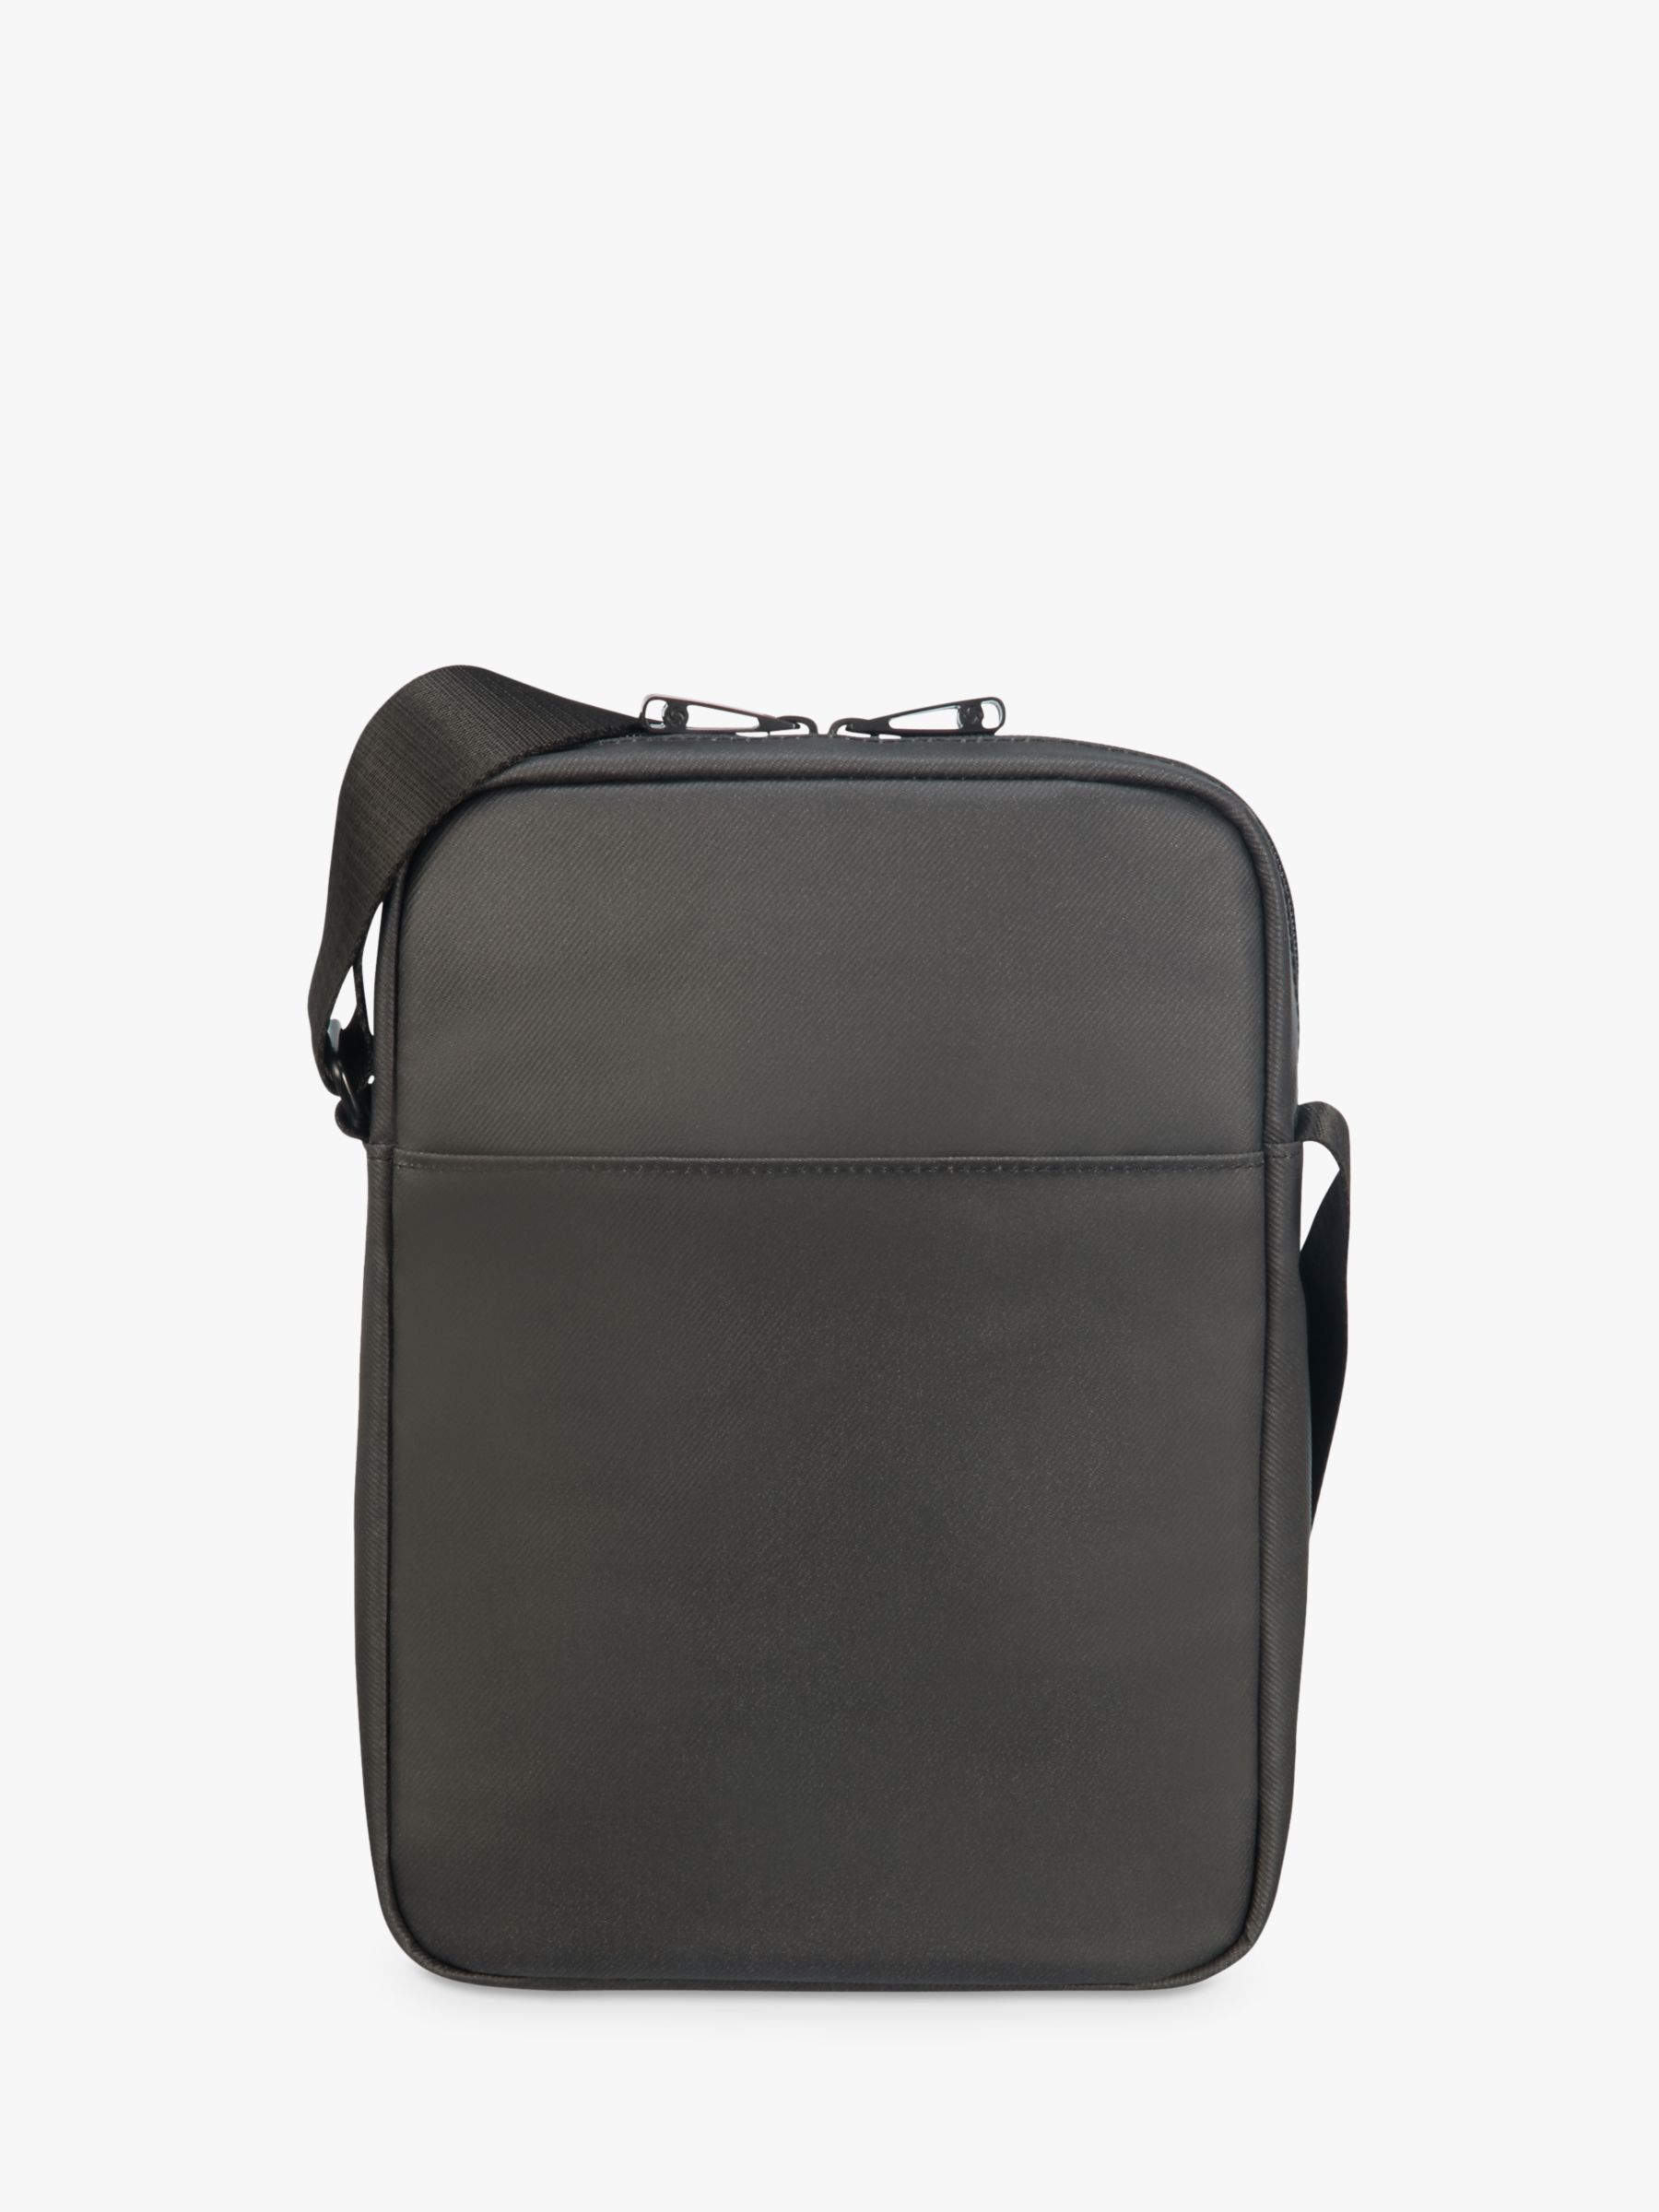 Samsonite Cityvibe 2.0 Tablet Cross Body Bag, Jet Black